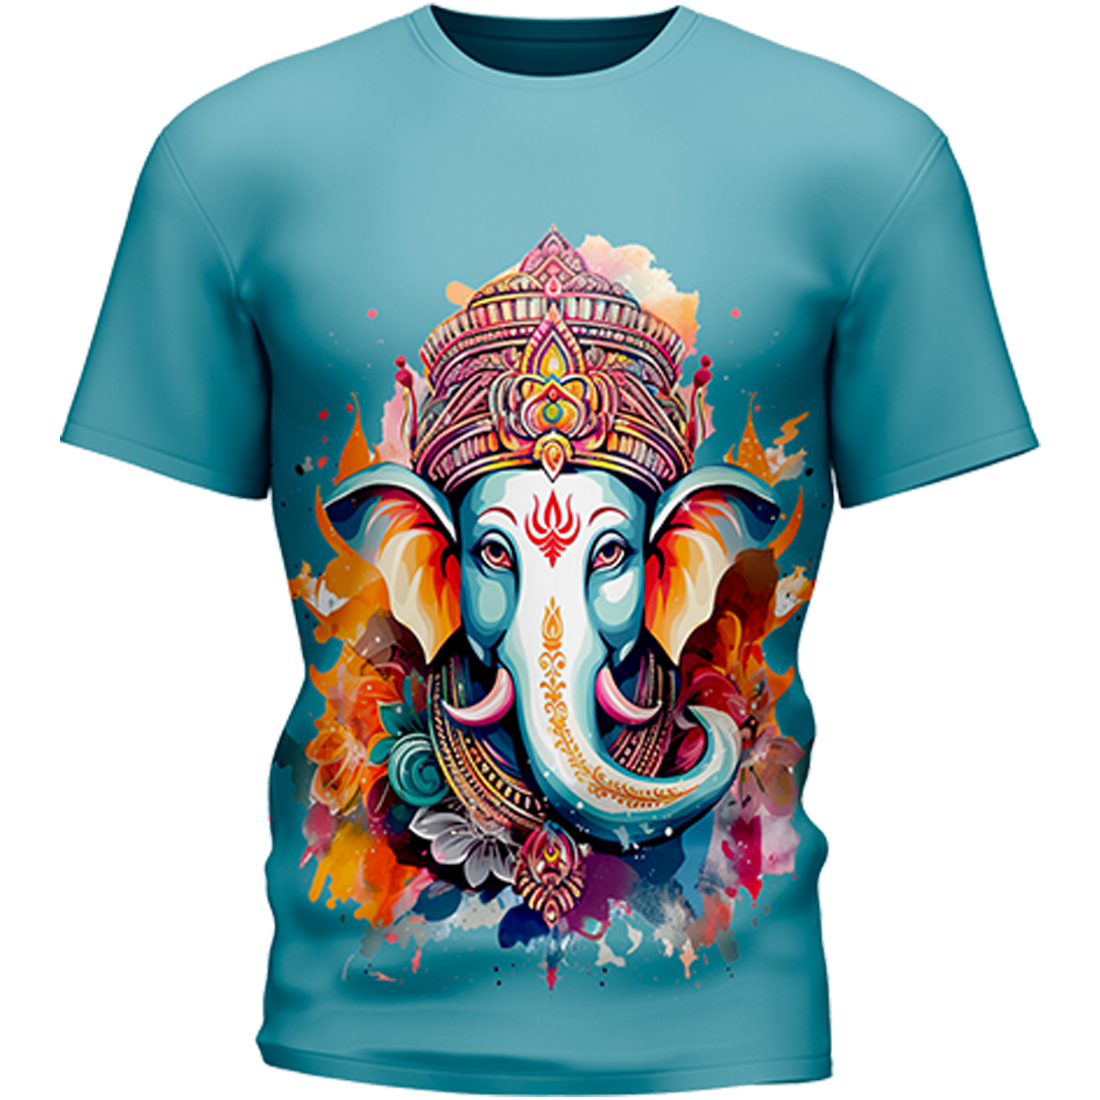 Ganesha T-Shirt With Your Name